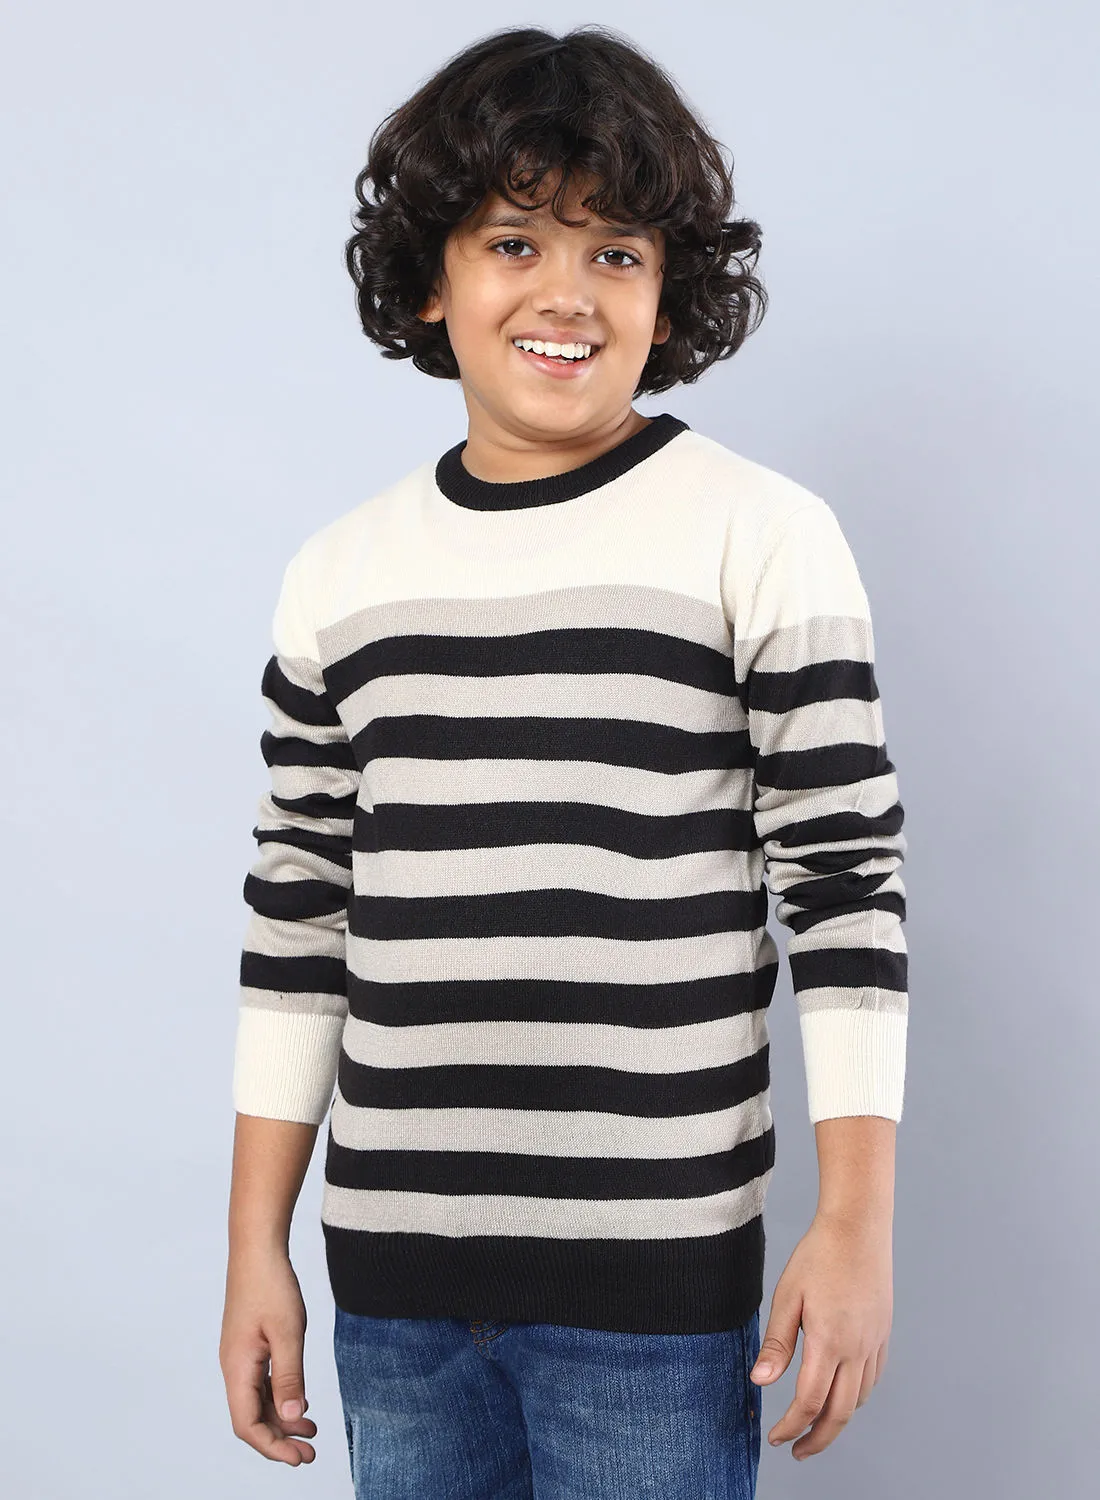 NEON Boy Casual Long Sleeve Sweater Black/White